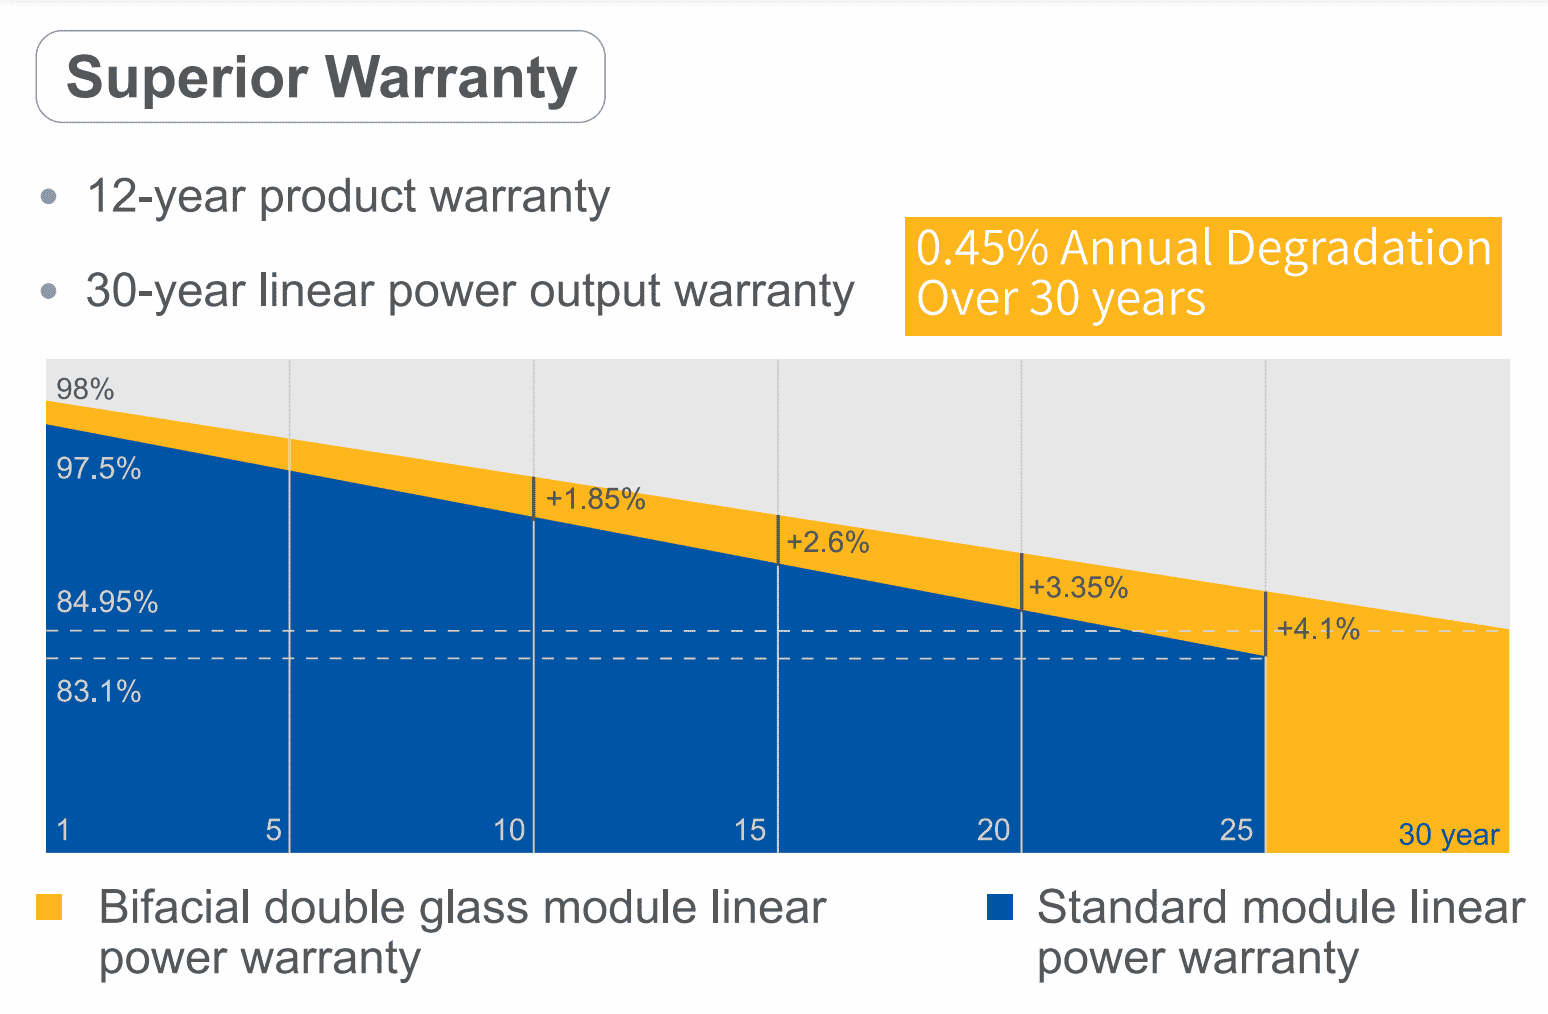 Superior Warranty, JA Solar’s warranties